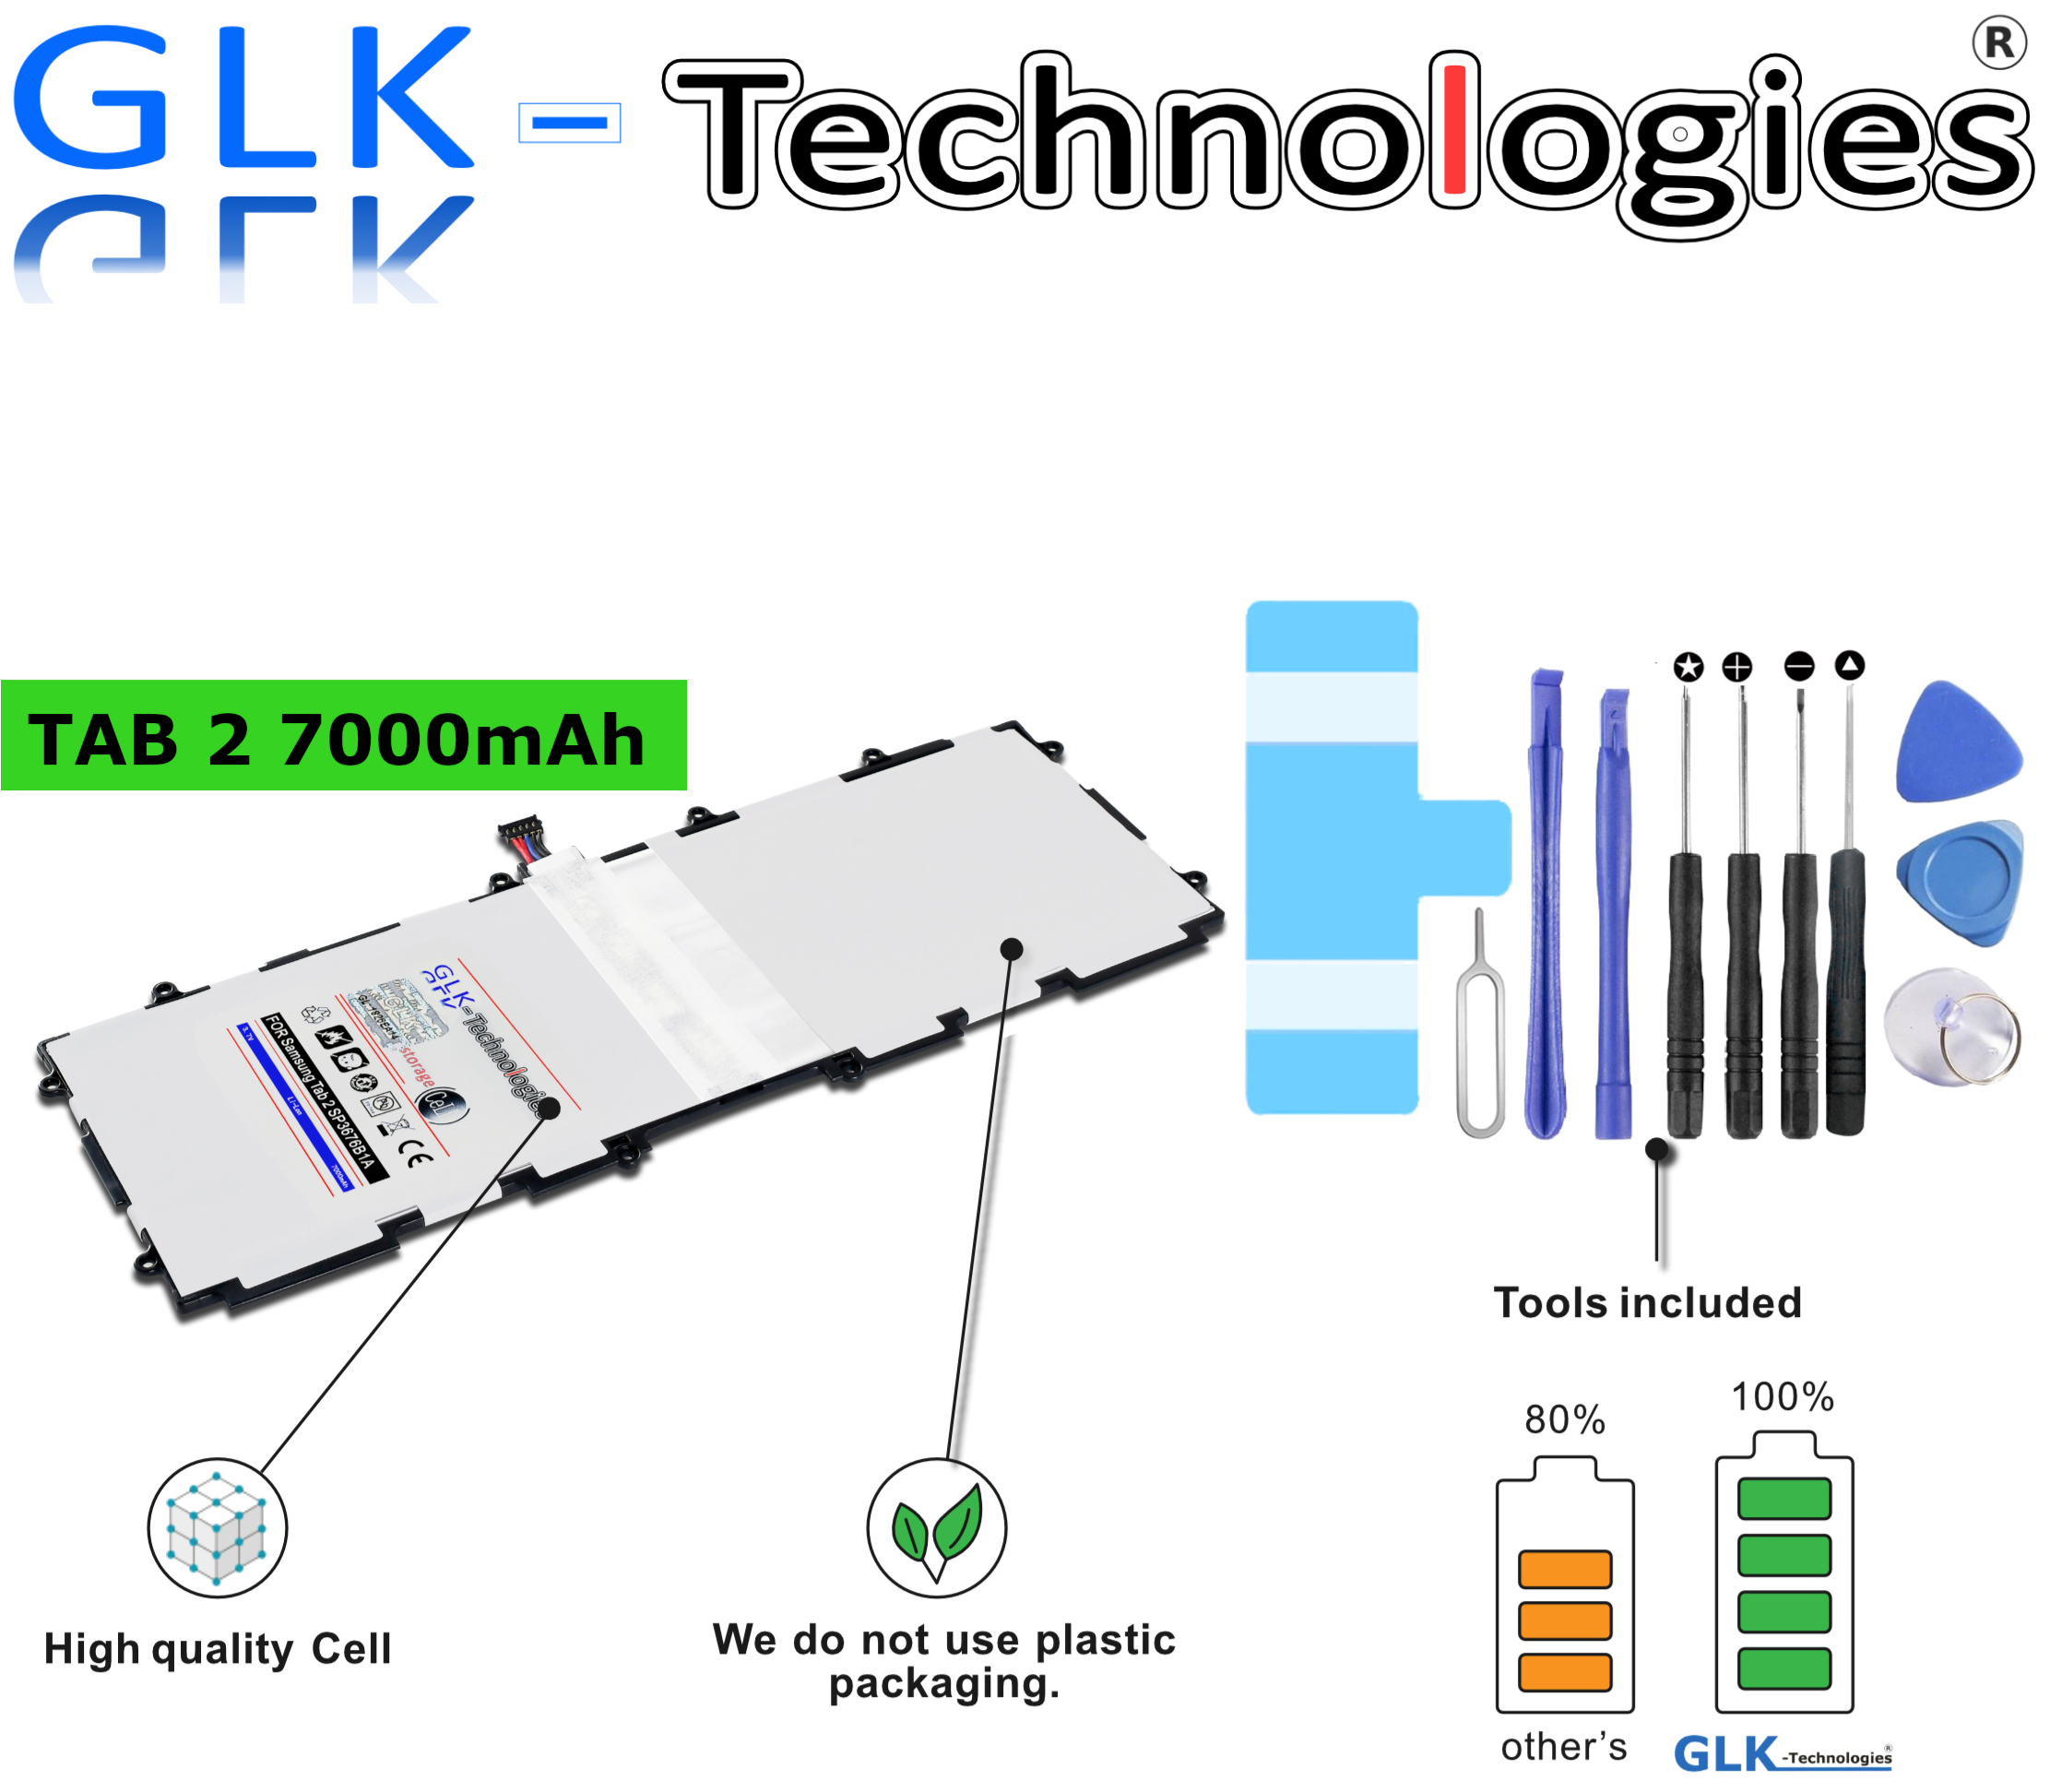 GLK-TECHNOLOGIES High Power Akku Galaxy Tool 2 GT-N8000 Akku Tab Tablet Akku + Ersatz Werkzeug Li-Ion für Galaxy GT-N8010 7000mAh Samsung